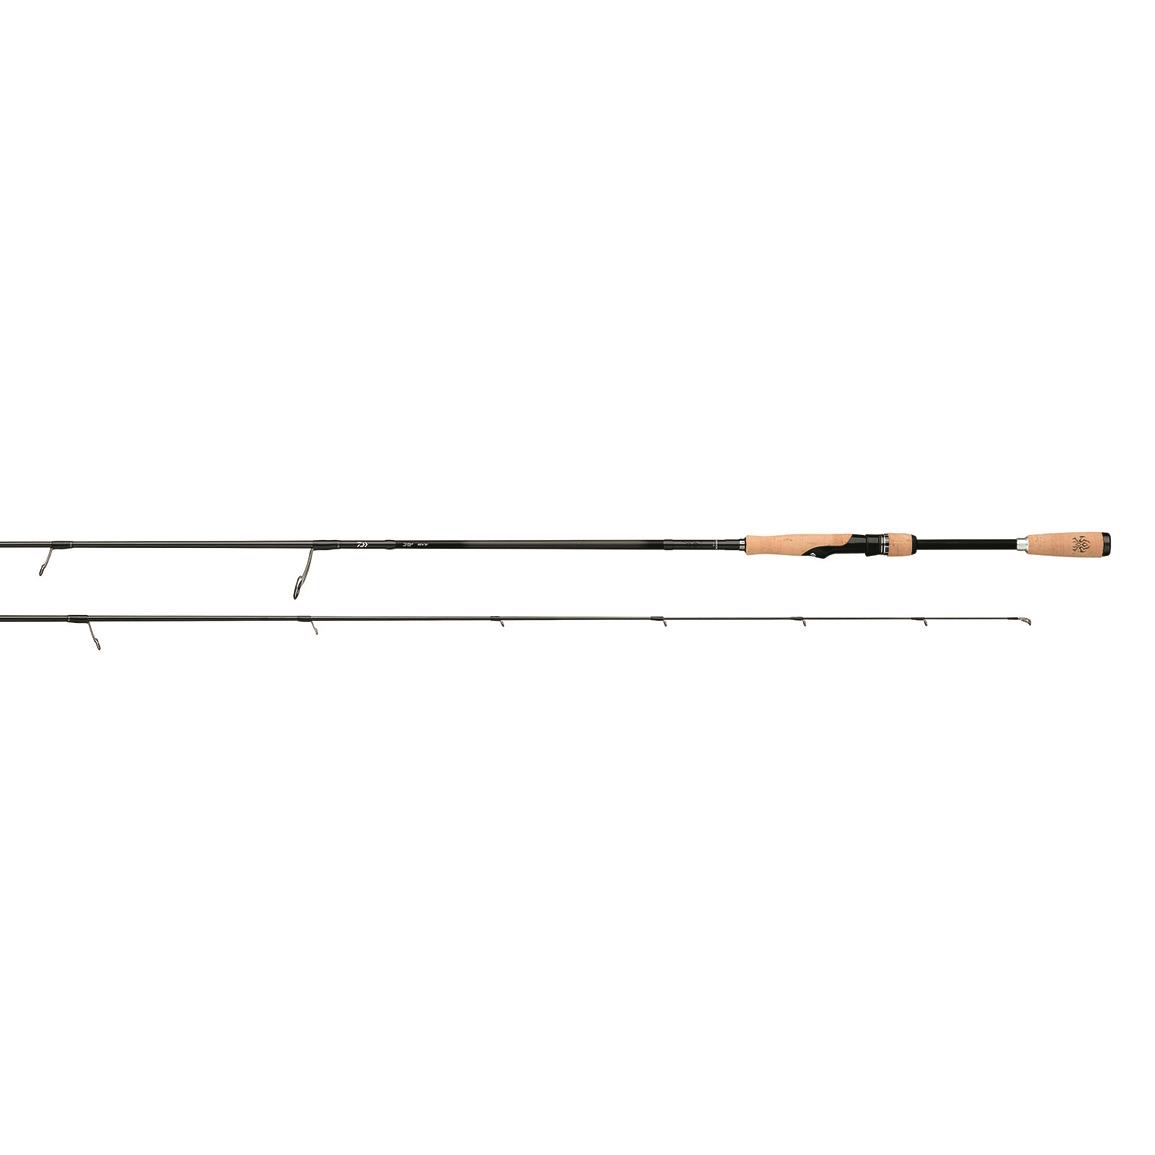 Daiwa Tatula Spinning Rod, 7'1" Length, Medium Light Power, Fast Action